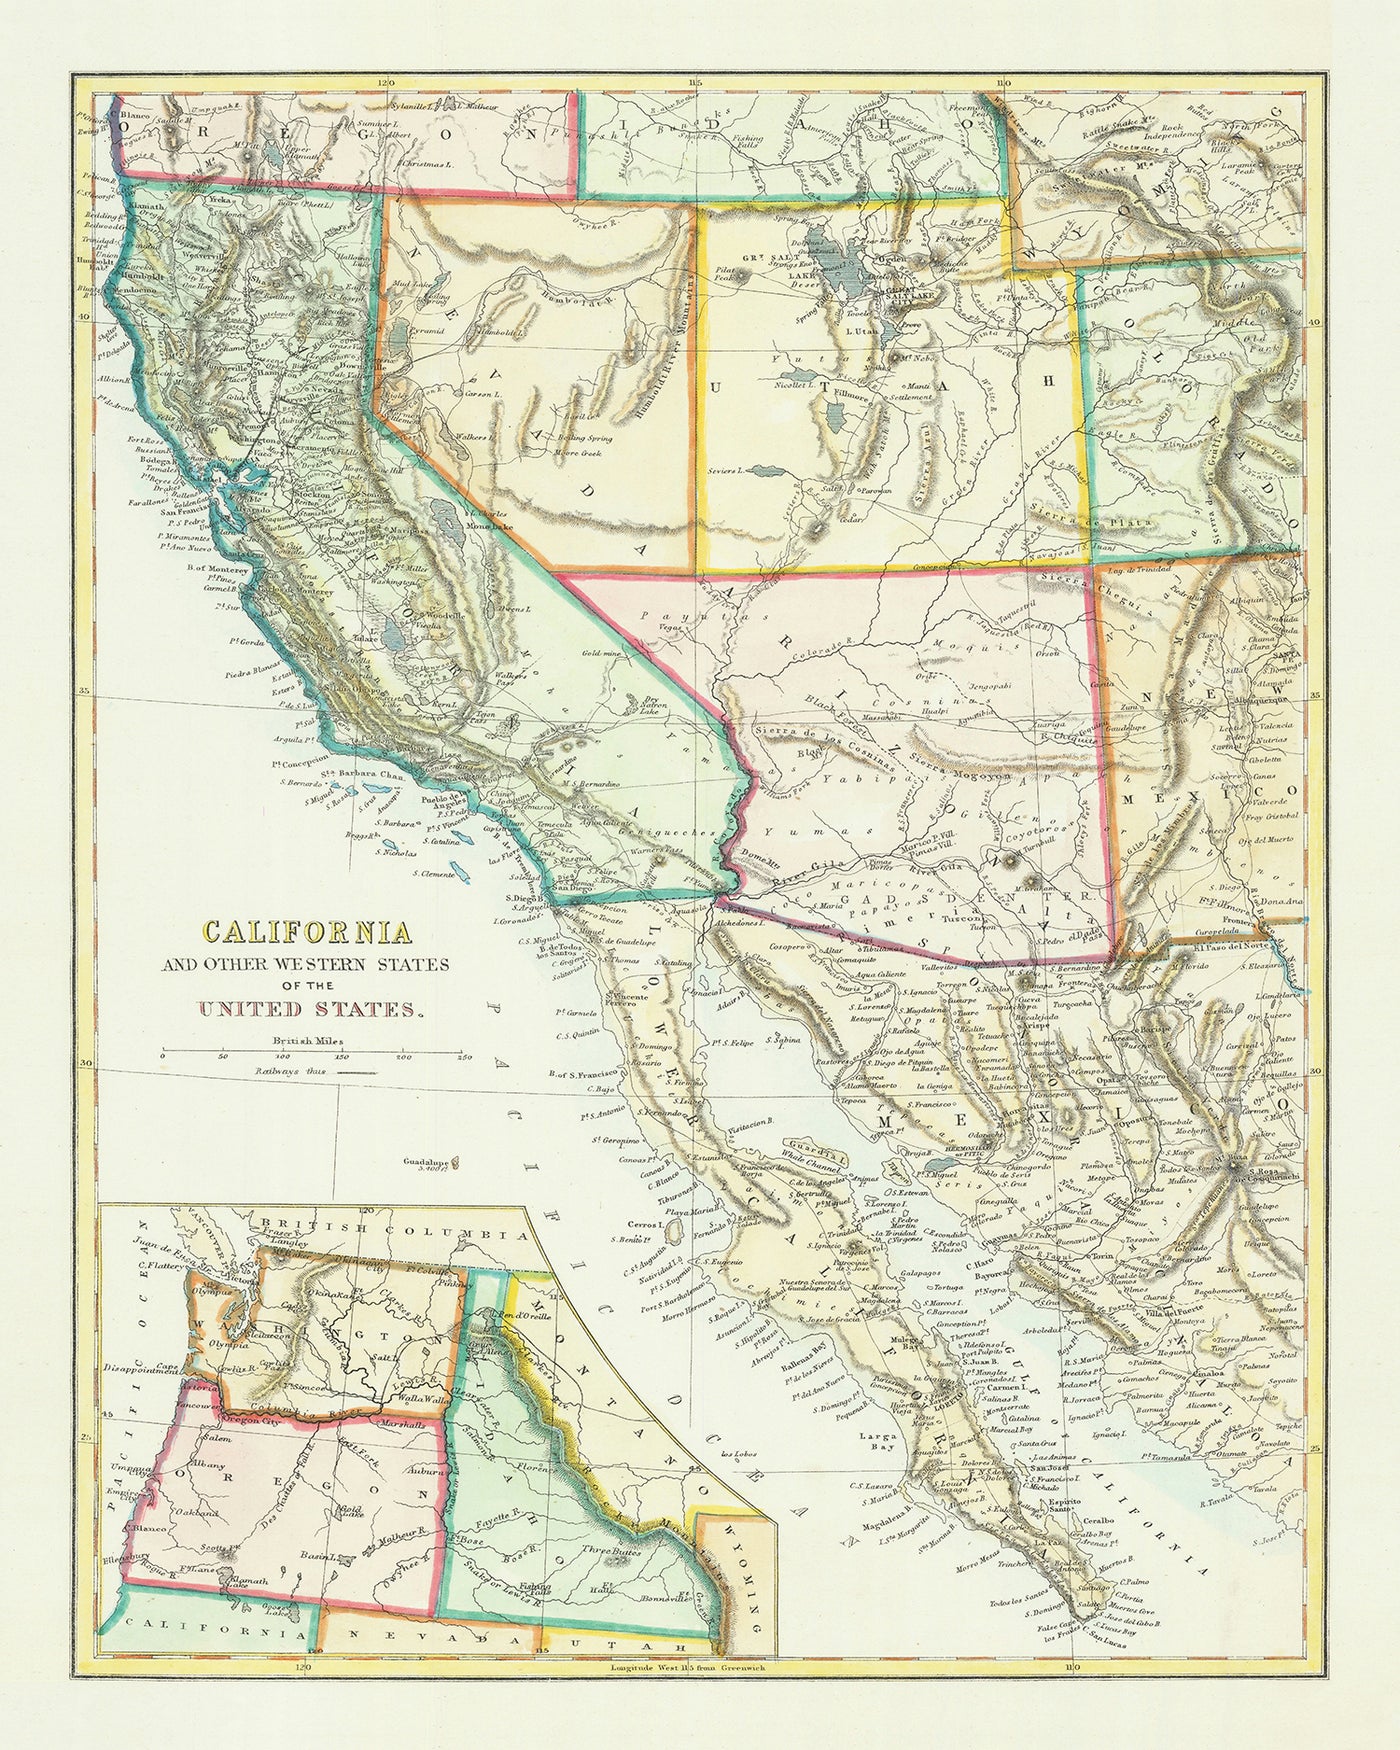 Old Map of California, Arizona, Nevada, Utah, etc. in 1868: San Francisco, Death Valley, Sierra Nevada, Colorado River, Mormons in Utah